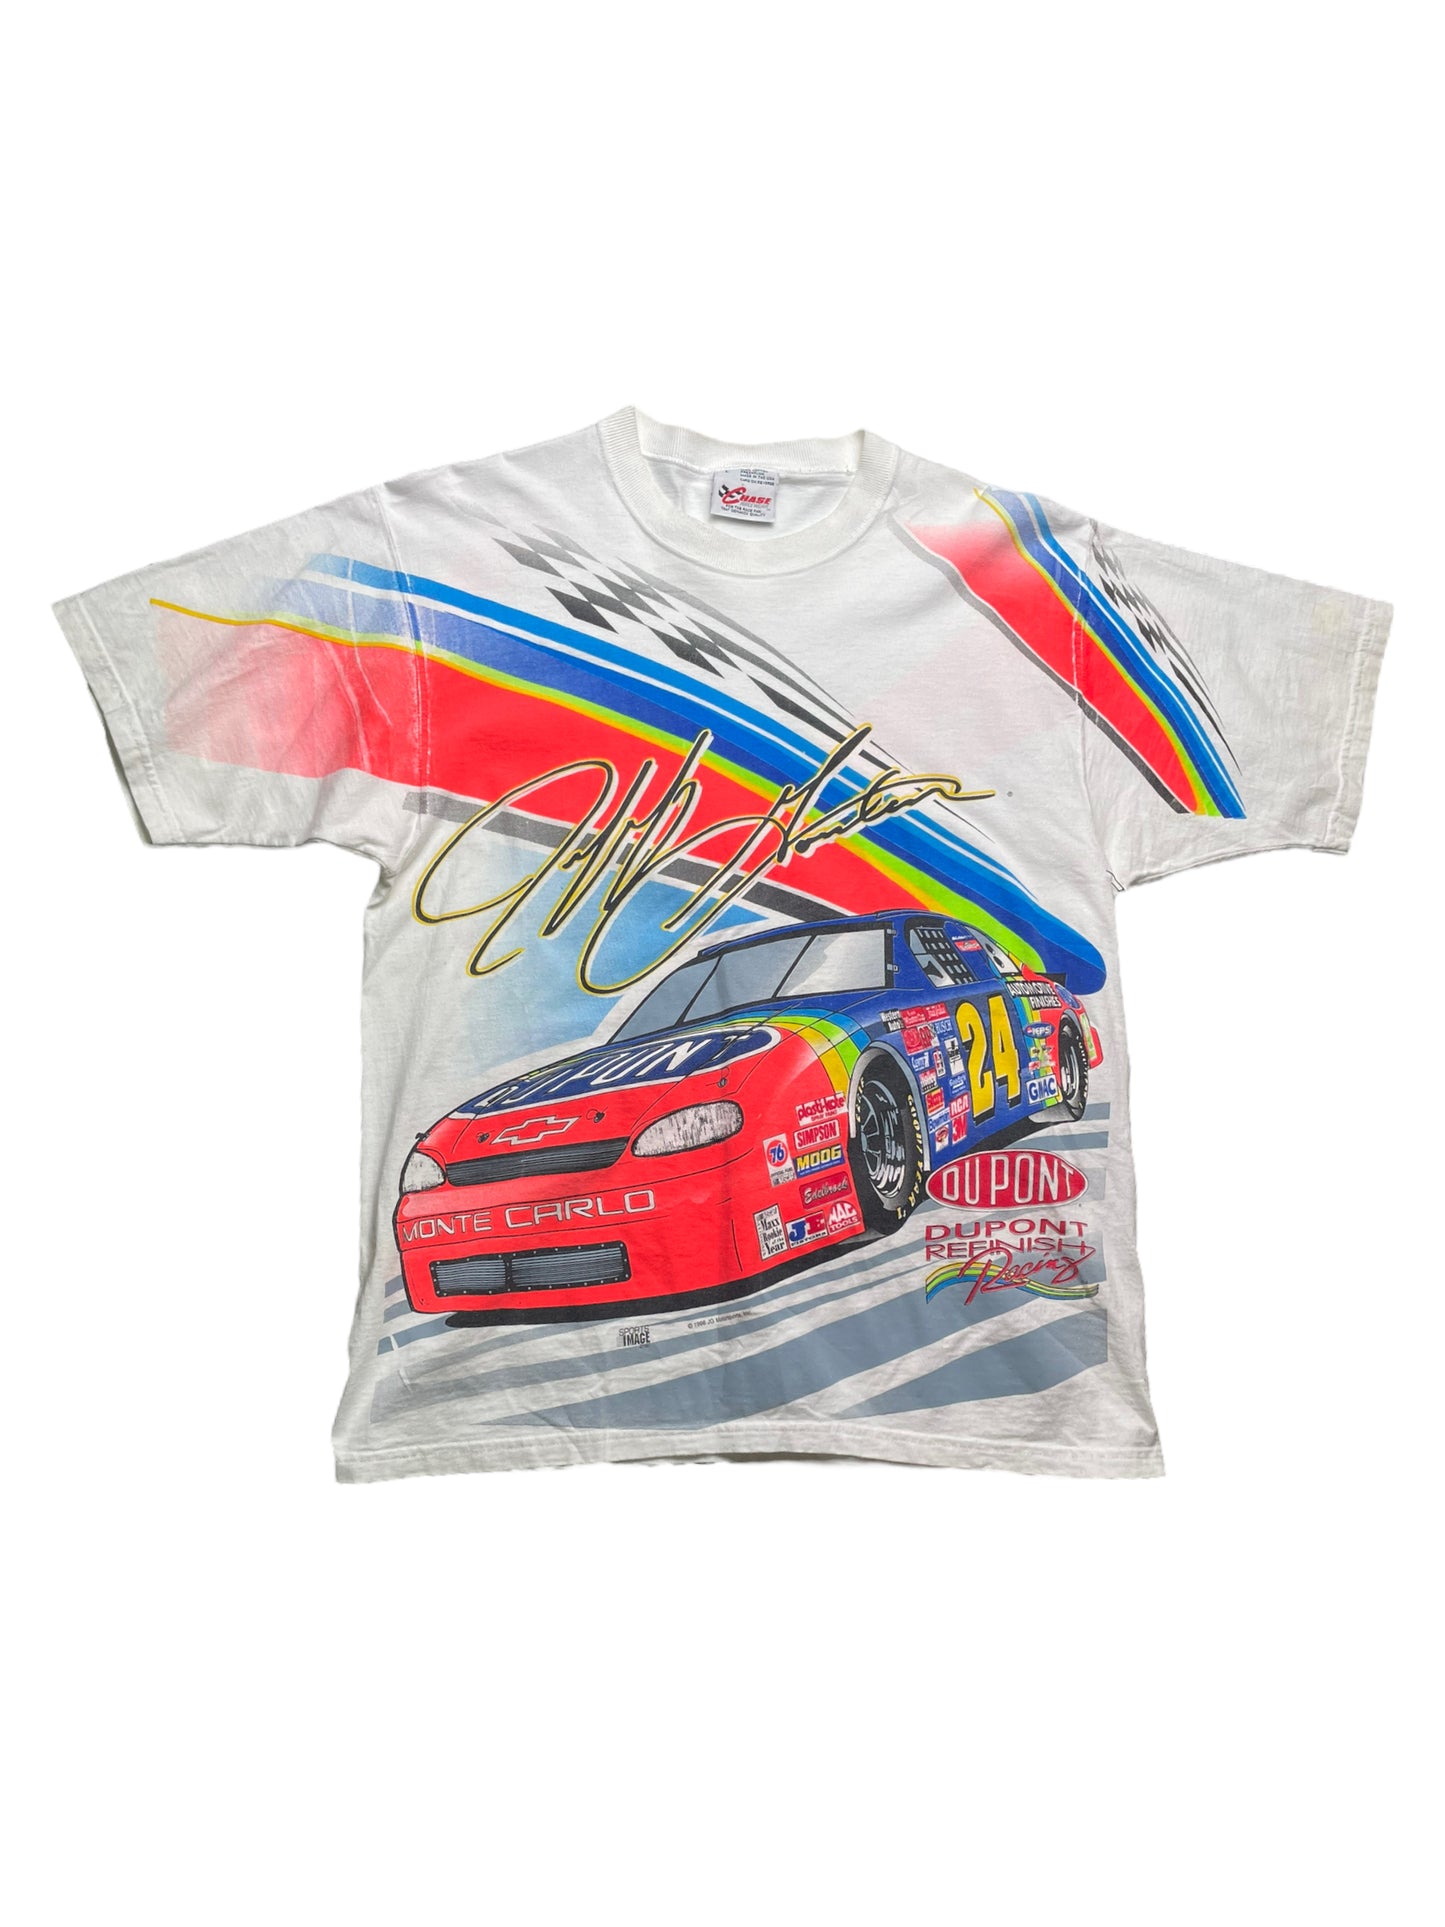 Vintage 1996 NASCAR Jeff Gordon All Over Print Tshirt Large